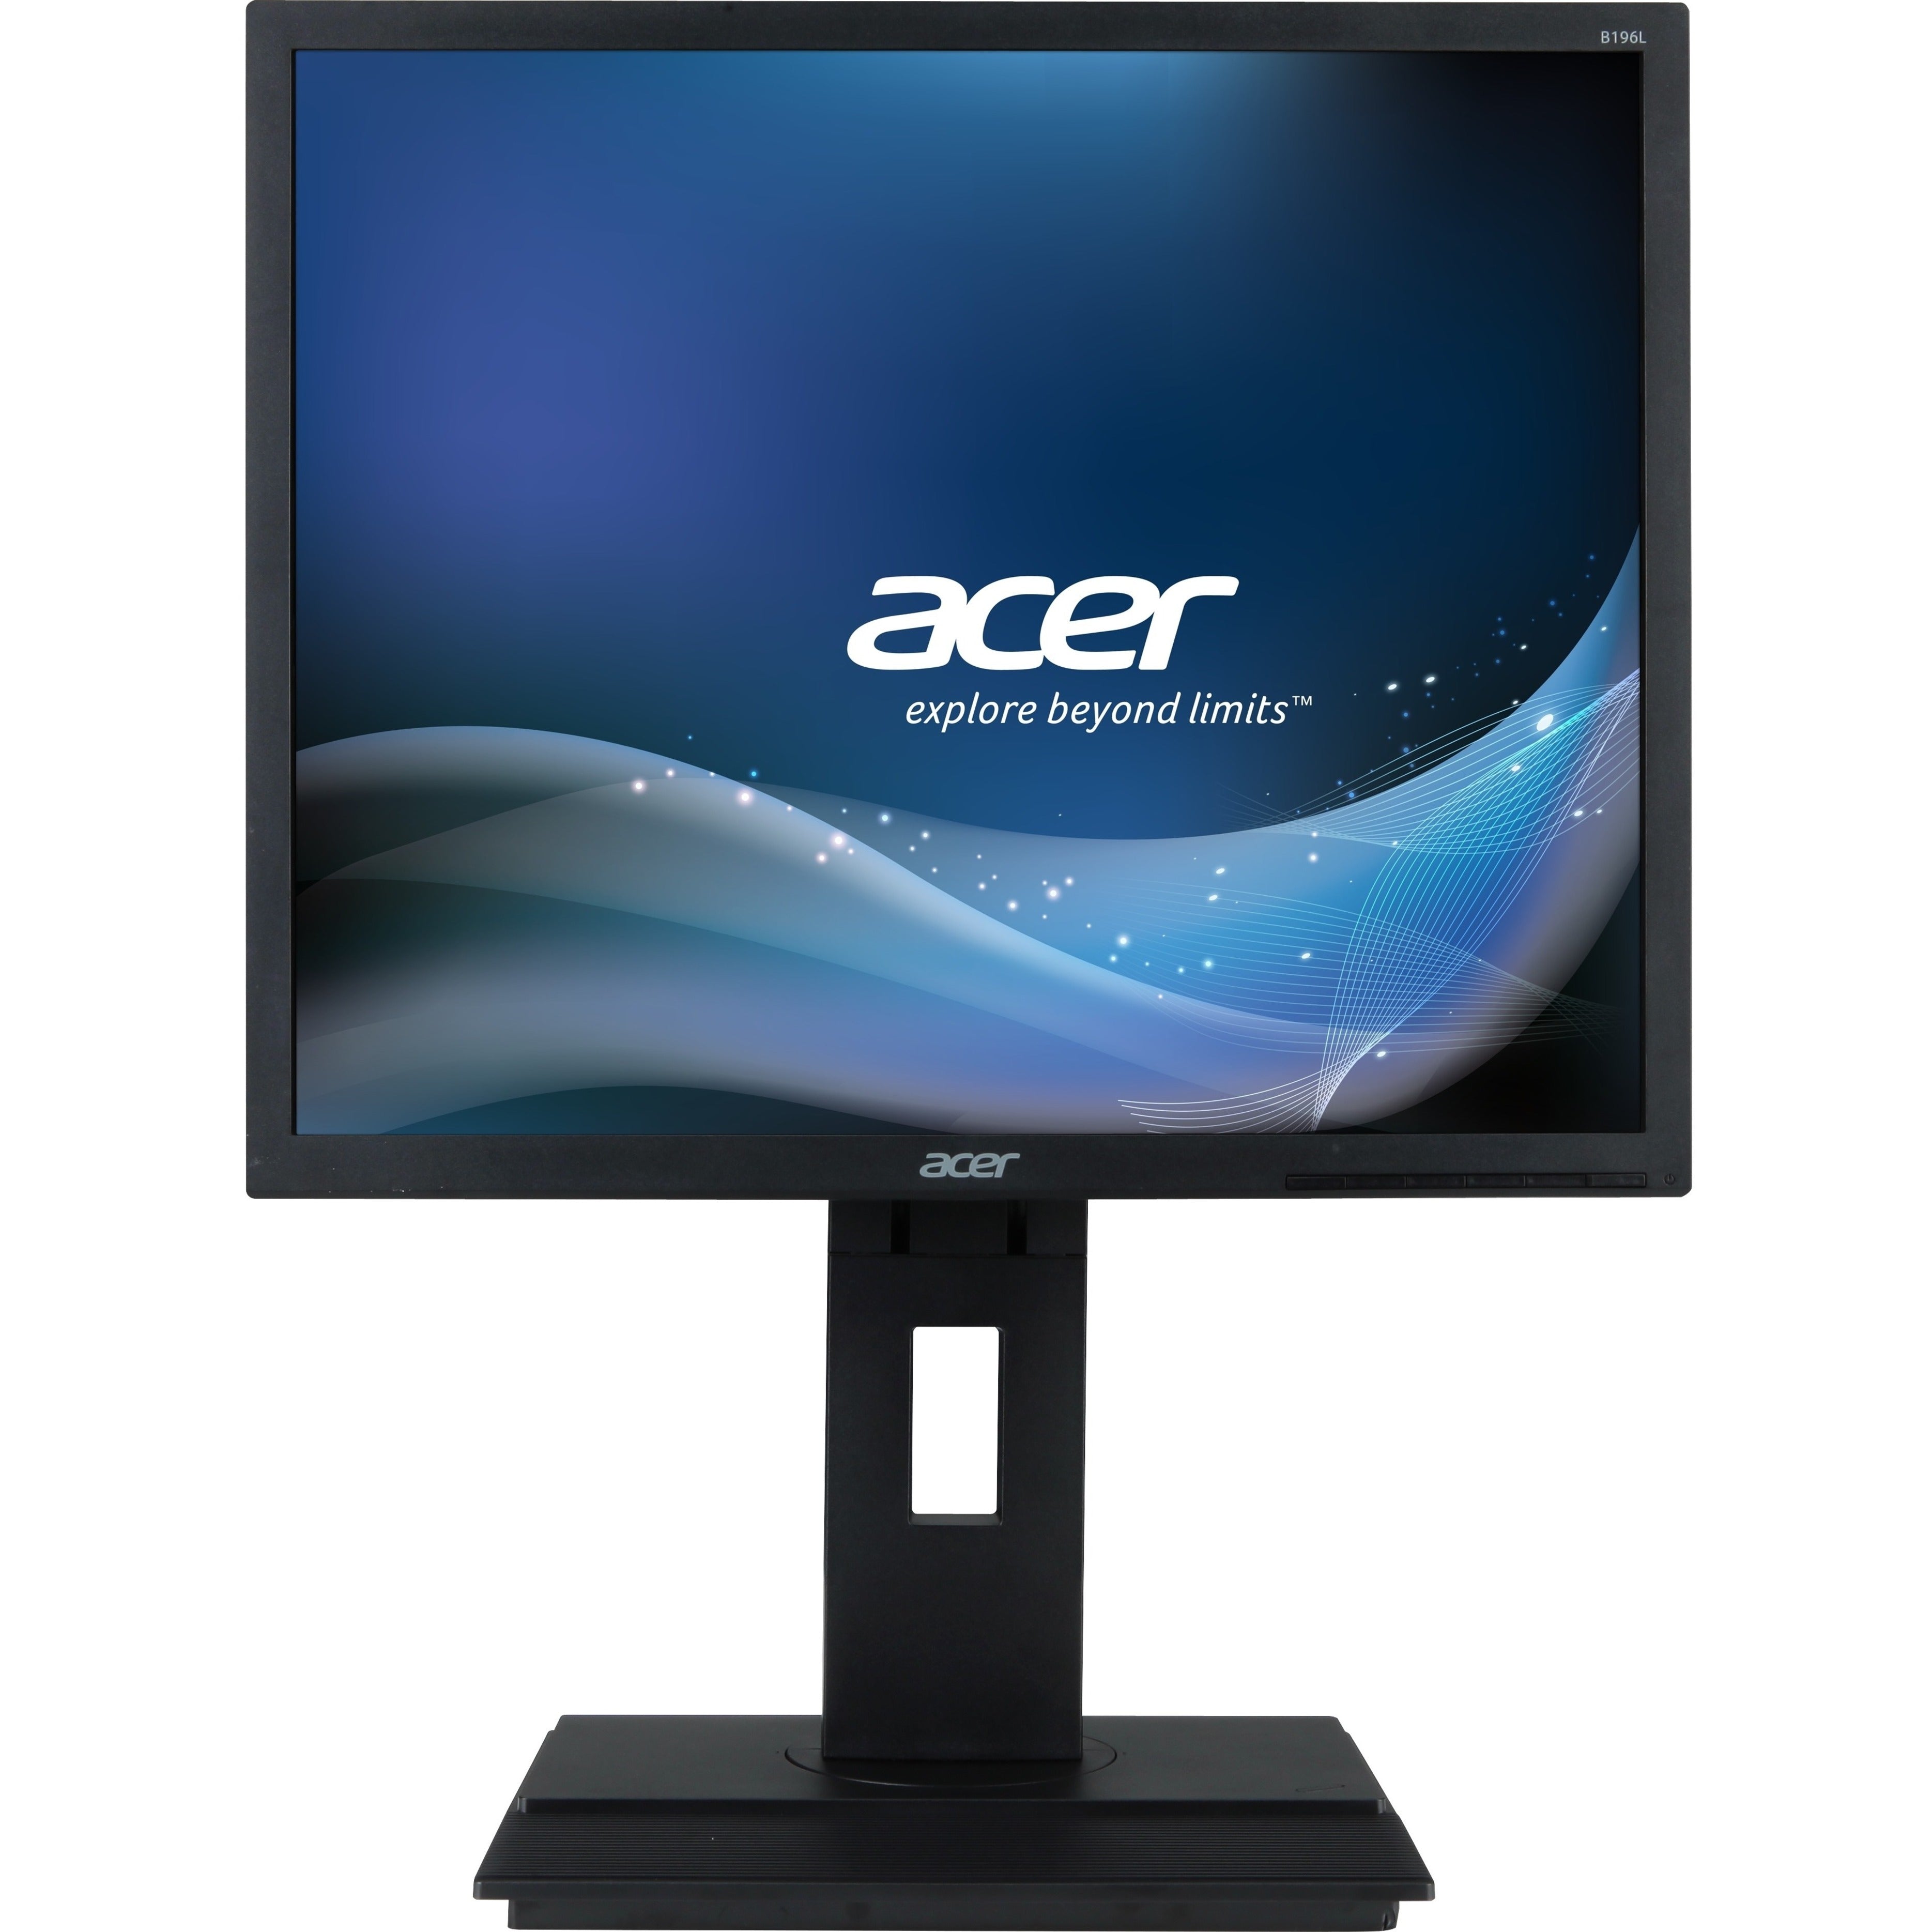 Acer UM.CB6AA.A02 B196L LCD Monitor, 19 5:4 5ms 250nits LED, VGA DVI (w/HDCP), Height Adjustable, TCO7.0 Dark Grey